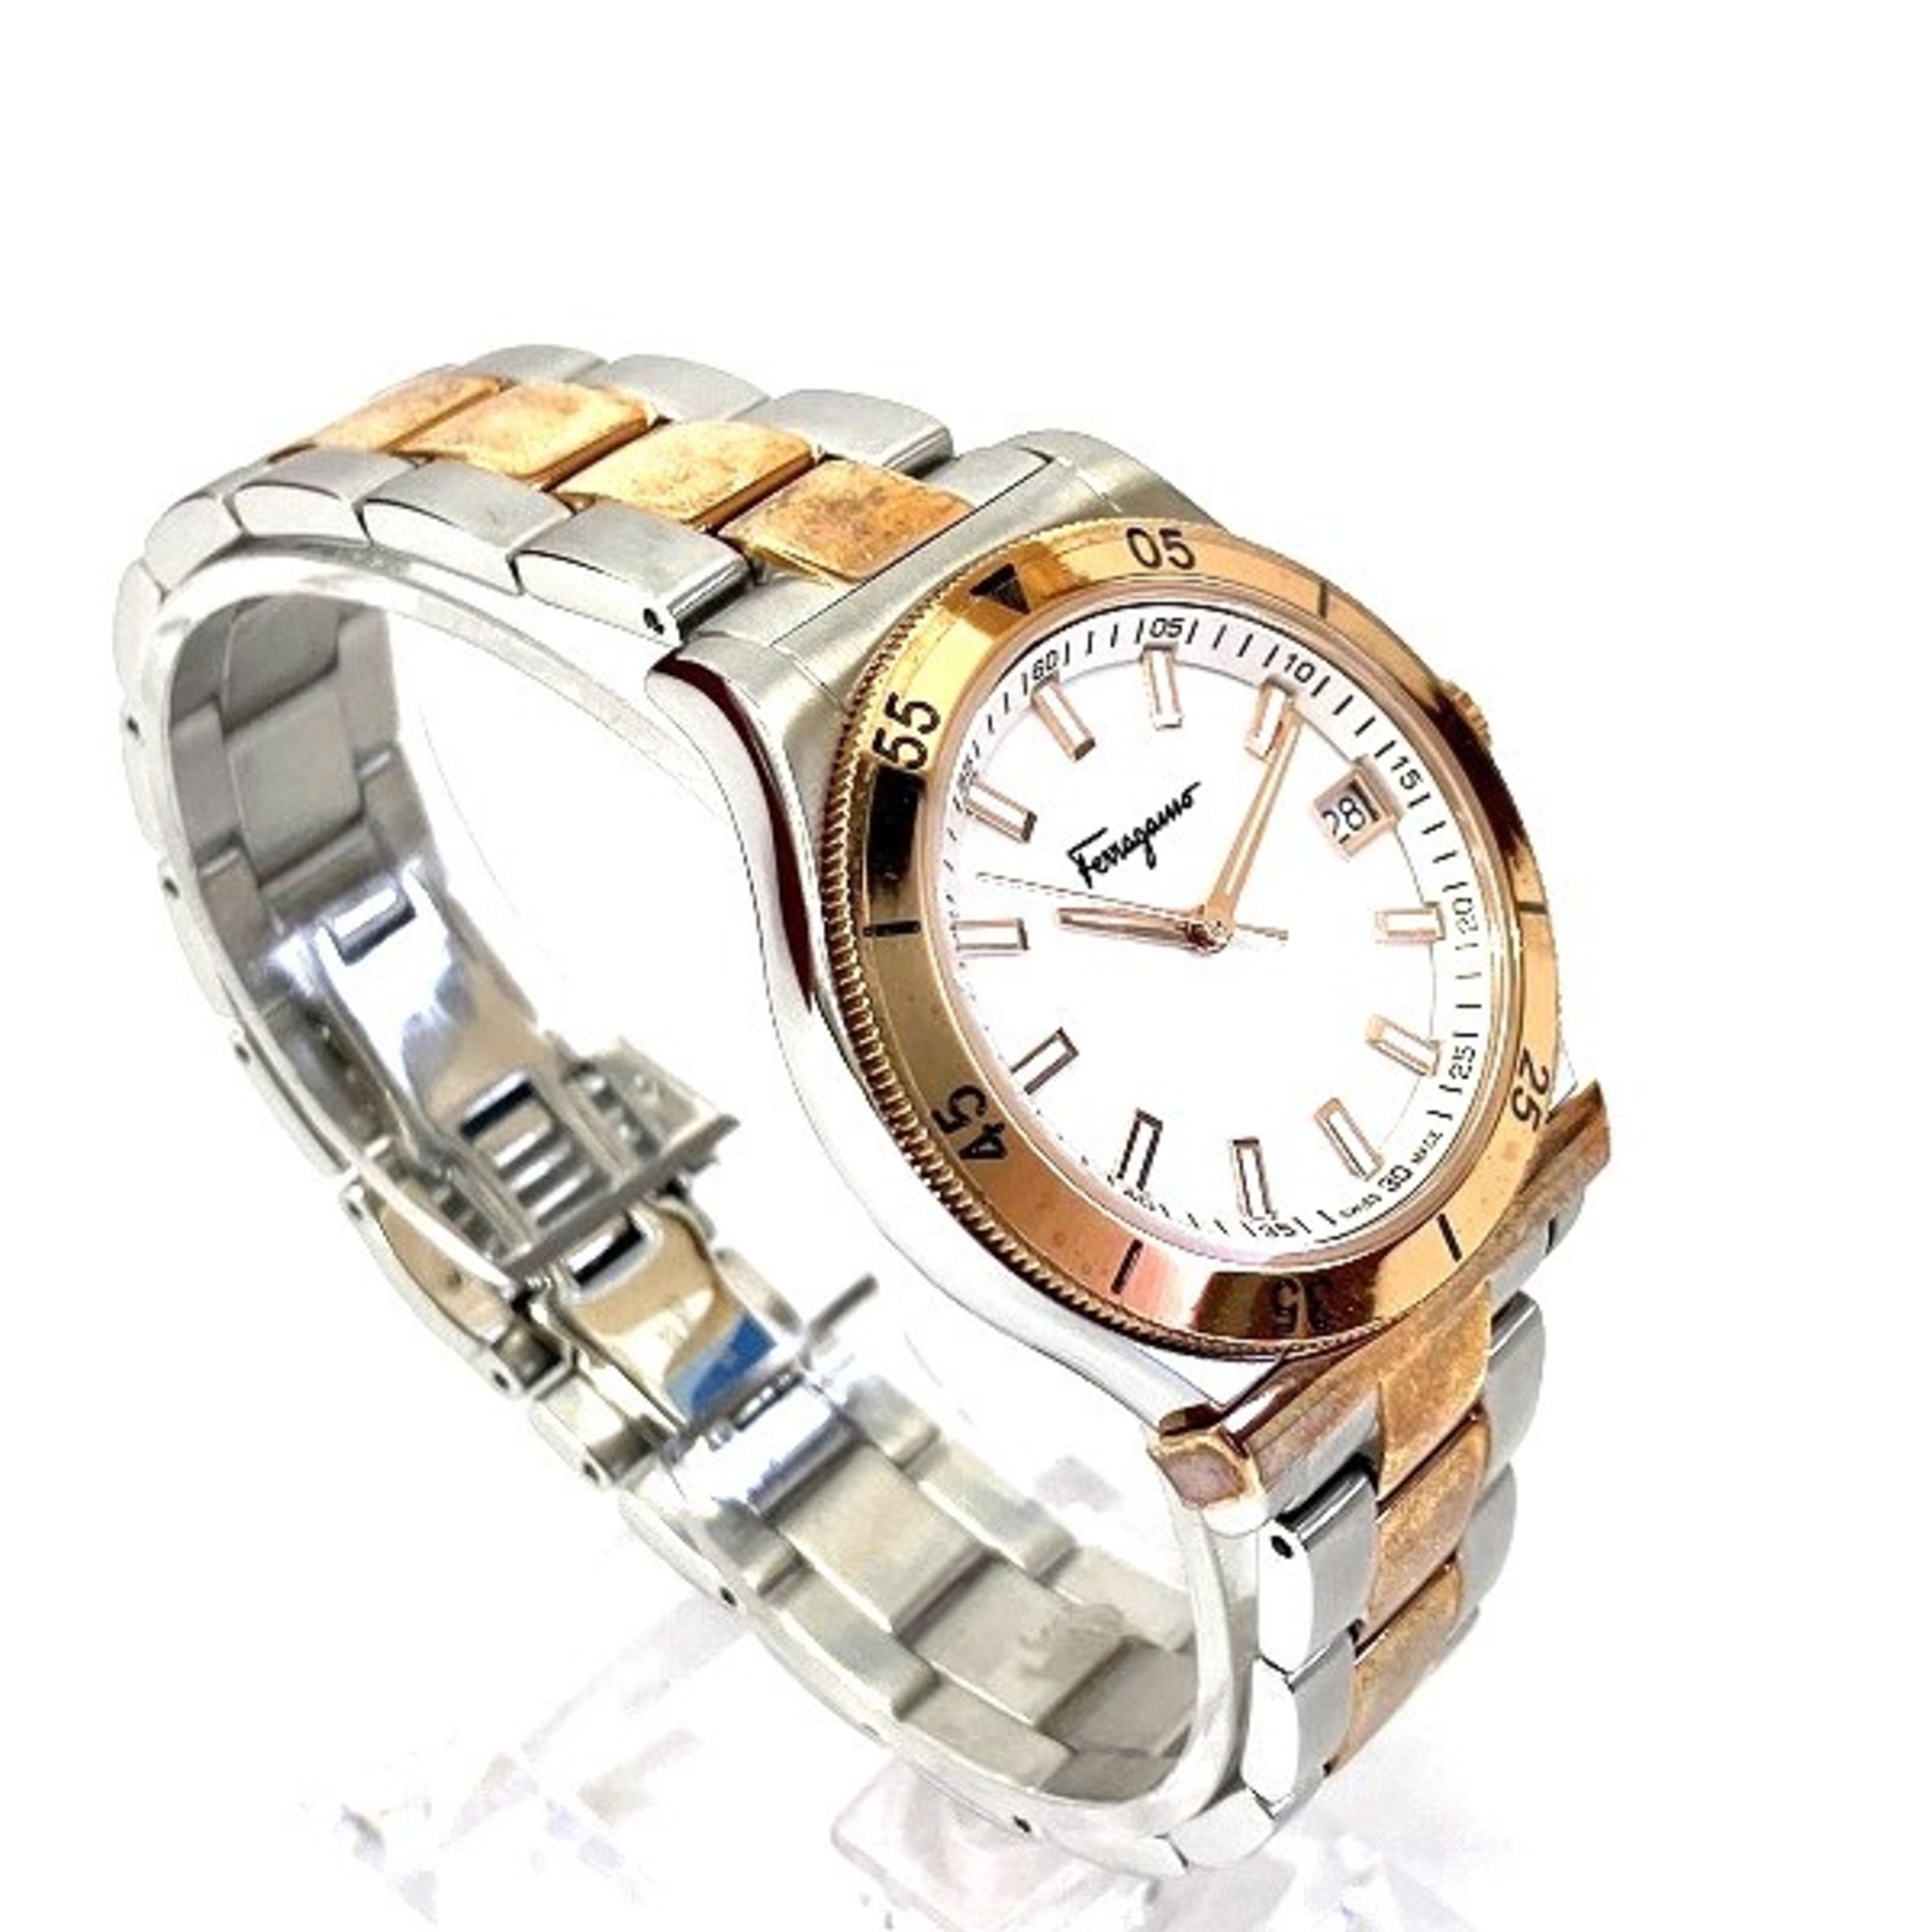 Salvatore Ferragamo FH0010017 quartz shell dial watch men's